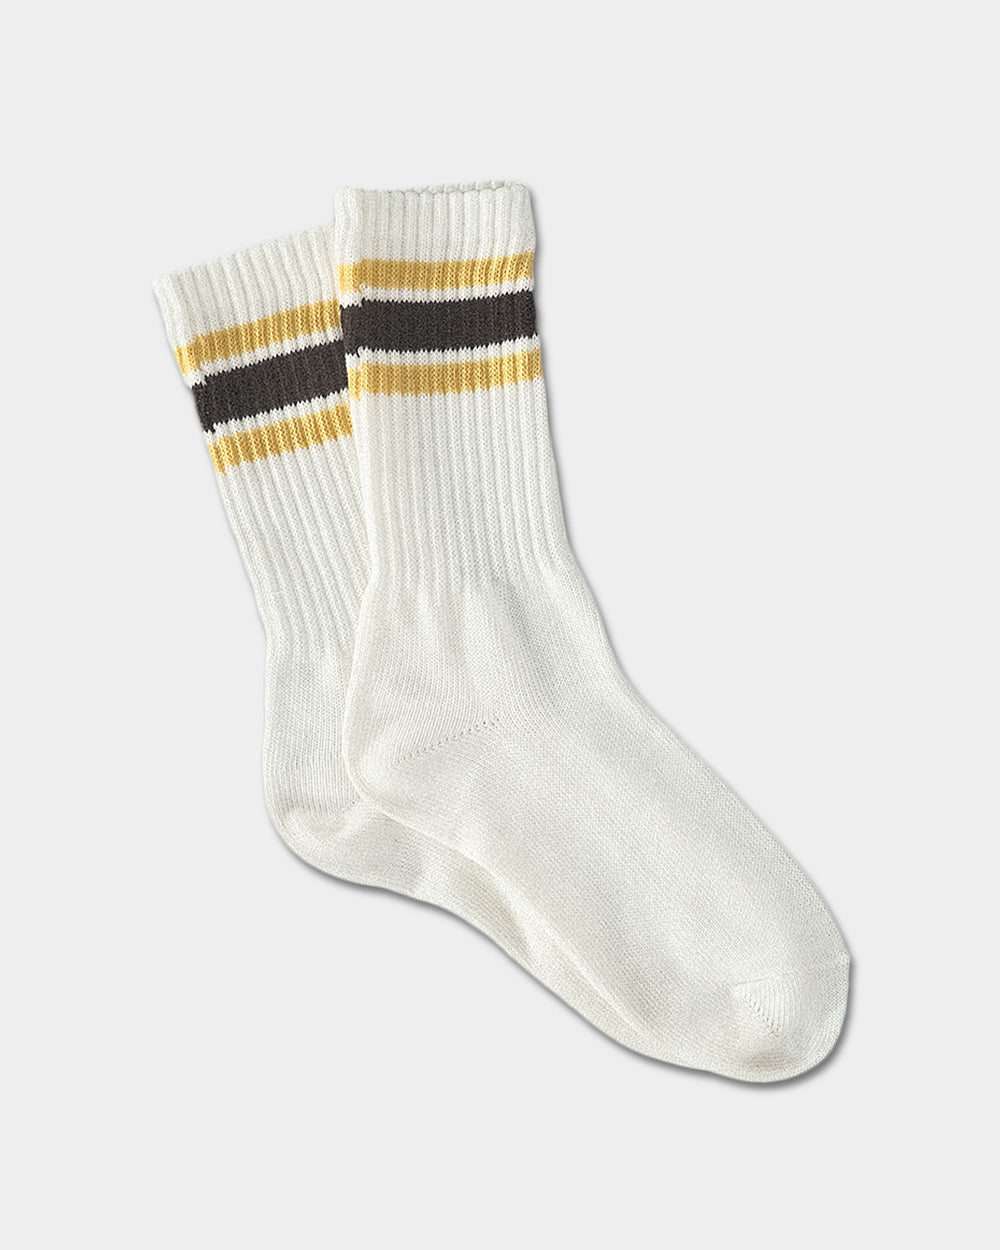 Striped Sports Socks - Brown & Yellow